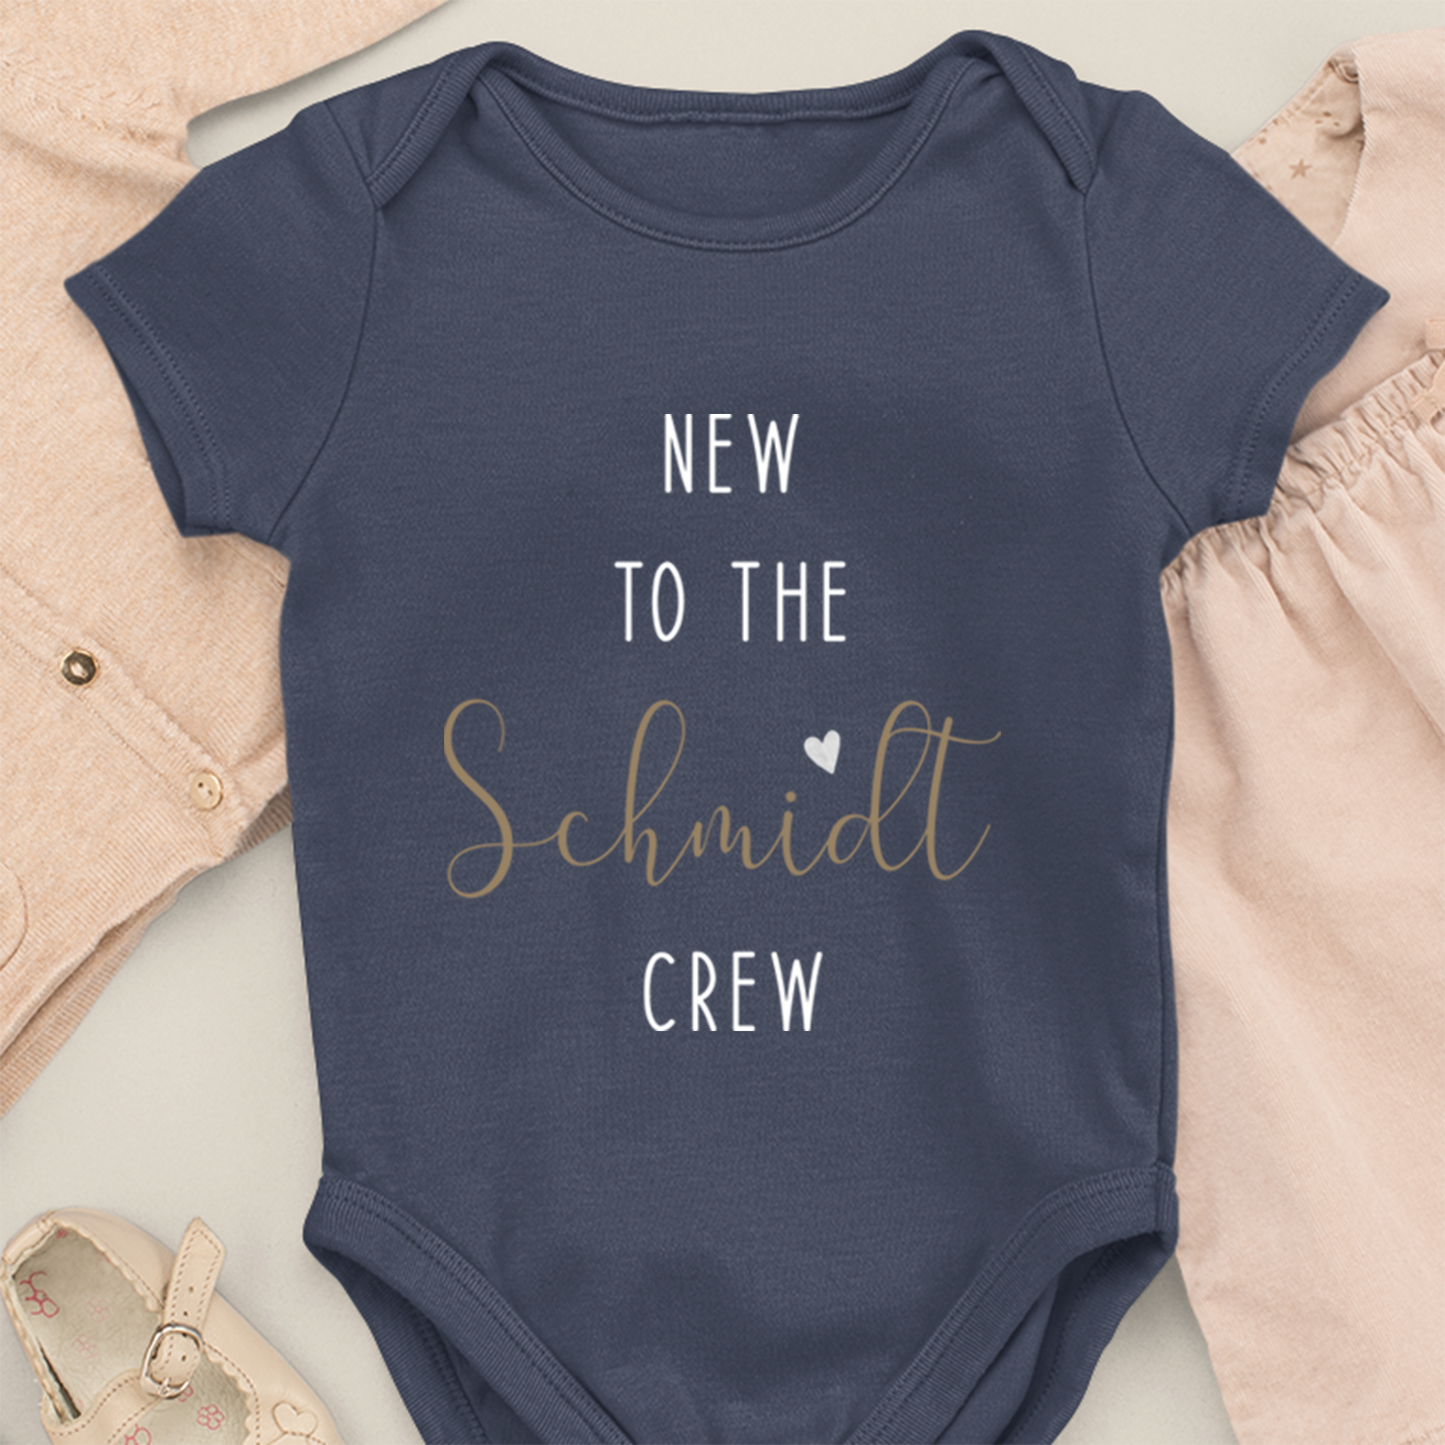 New to the "Family Name" Crew - Organic Baby Bodysuit White - Personalized Name